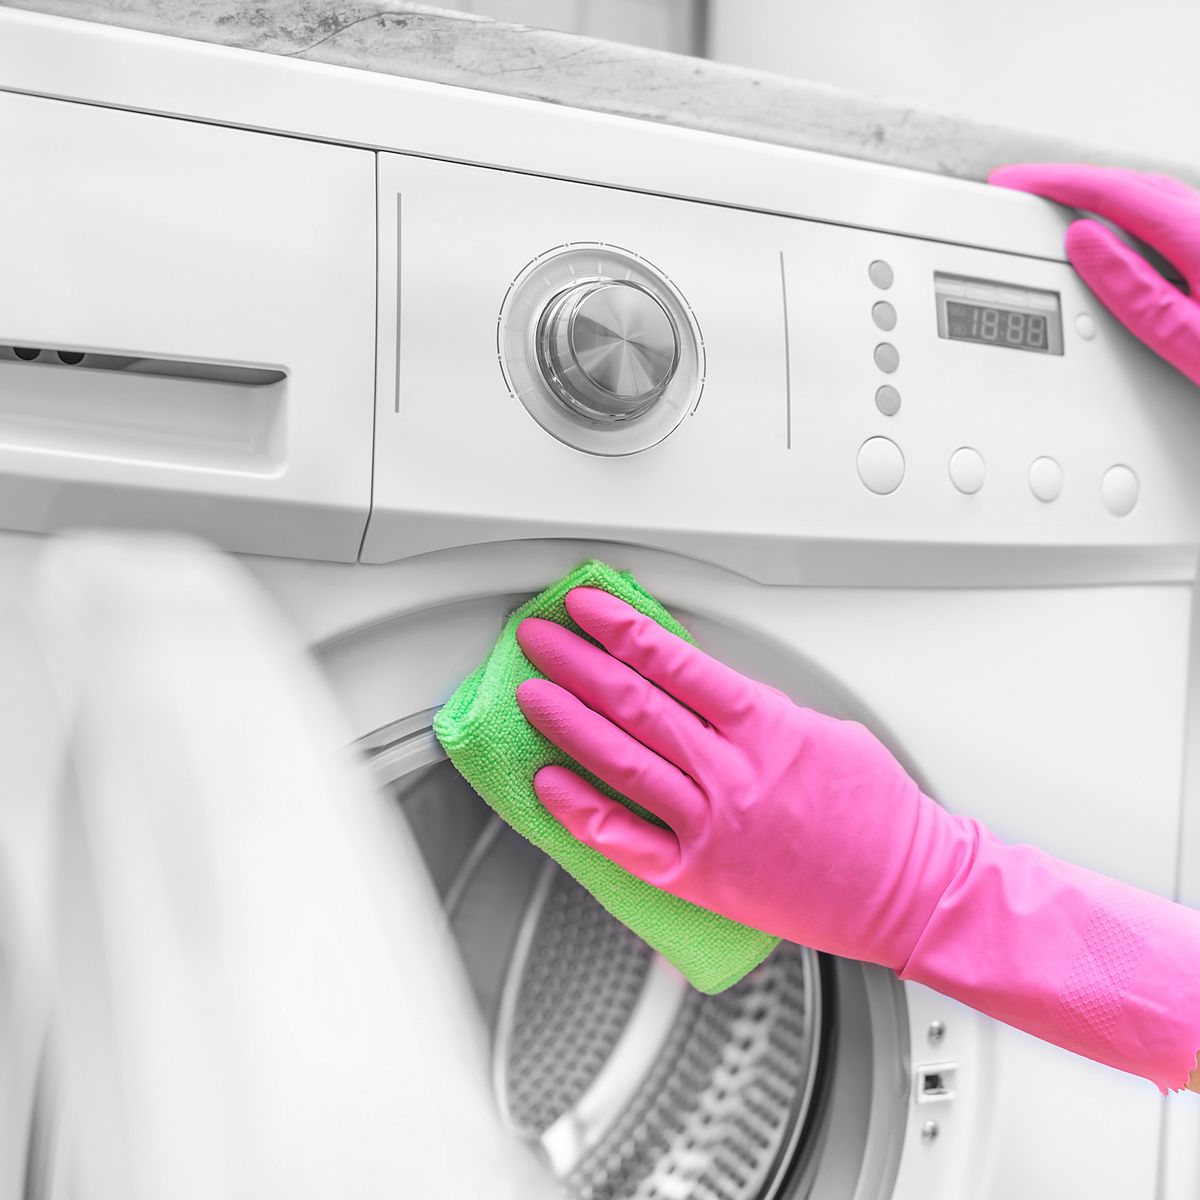 Washing Machine Cleaner And Wipes